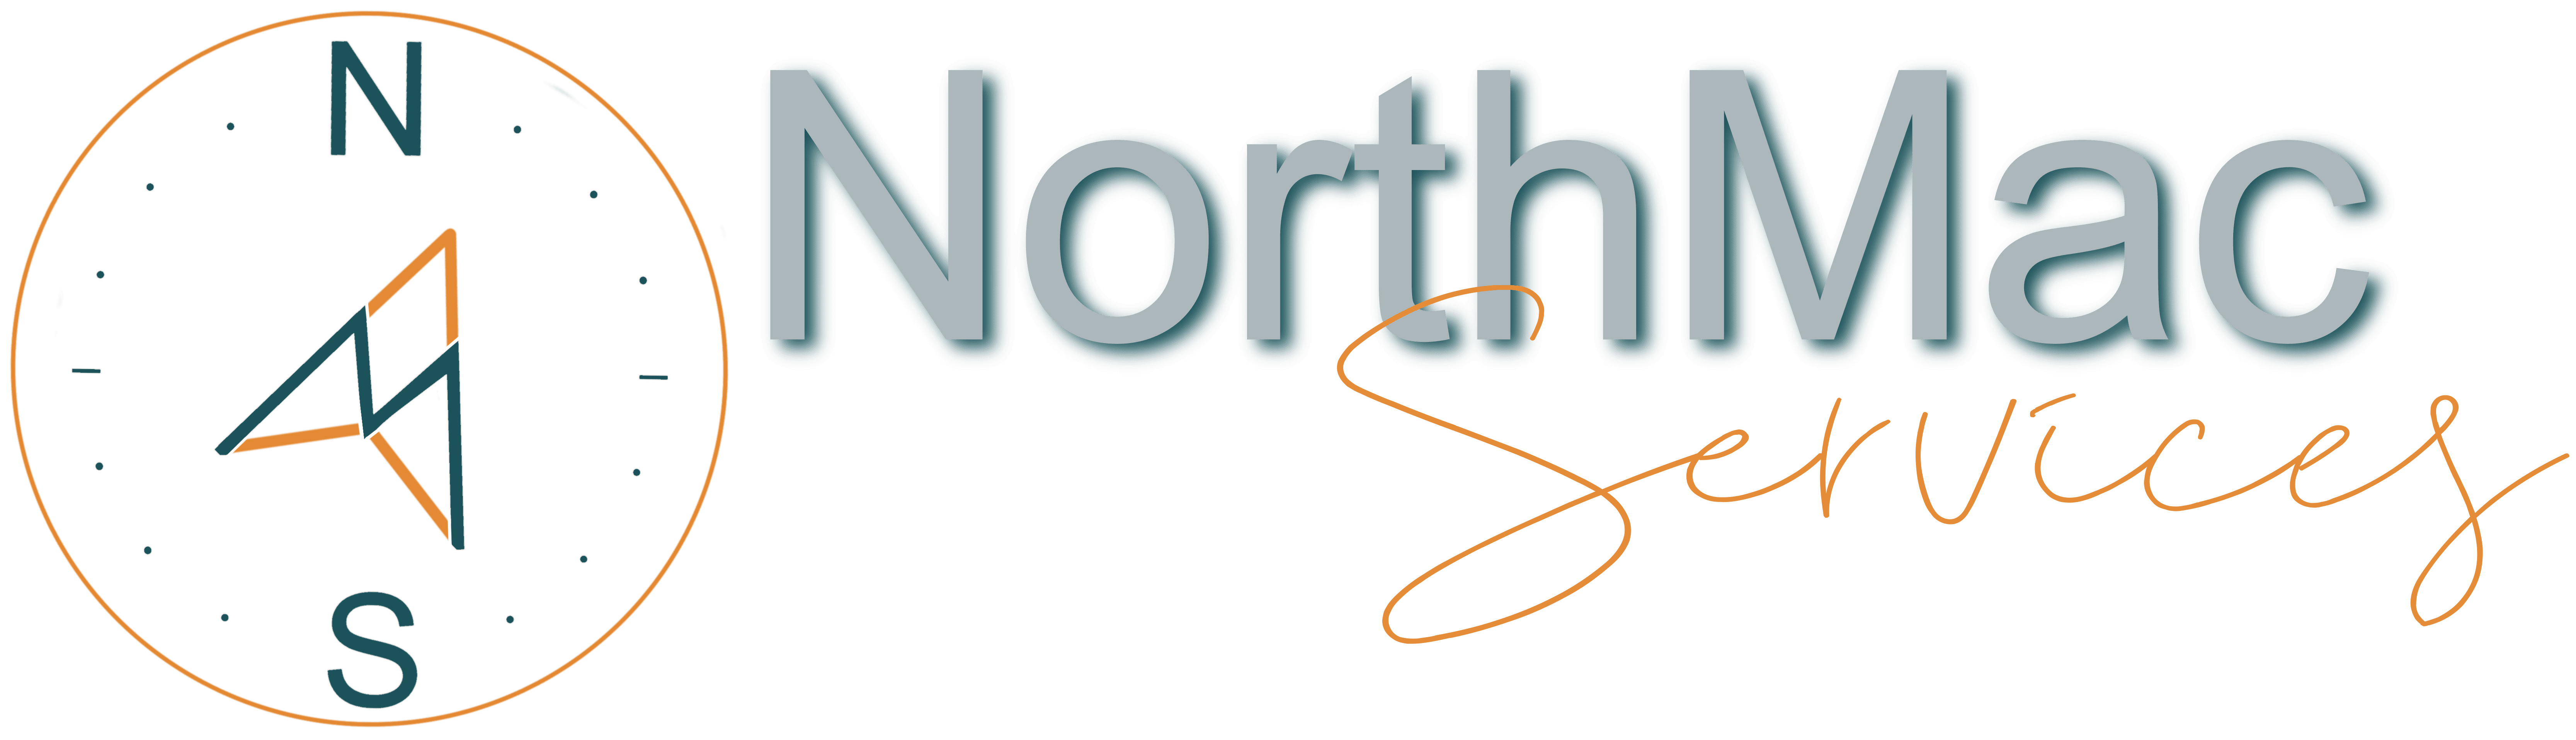 NorthMac Services